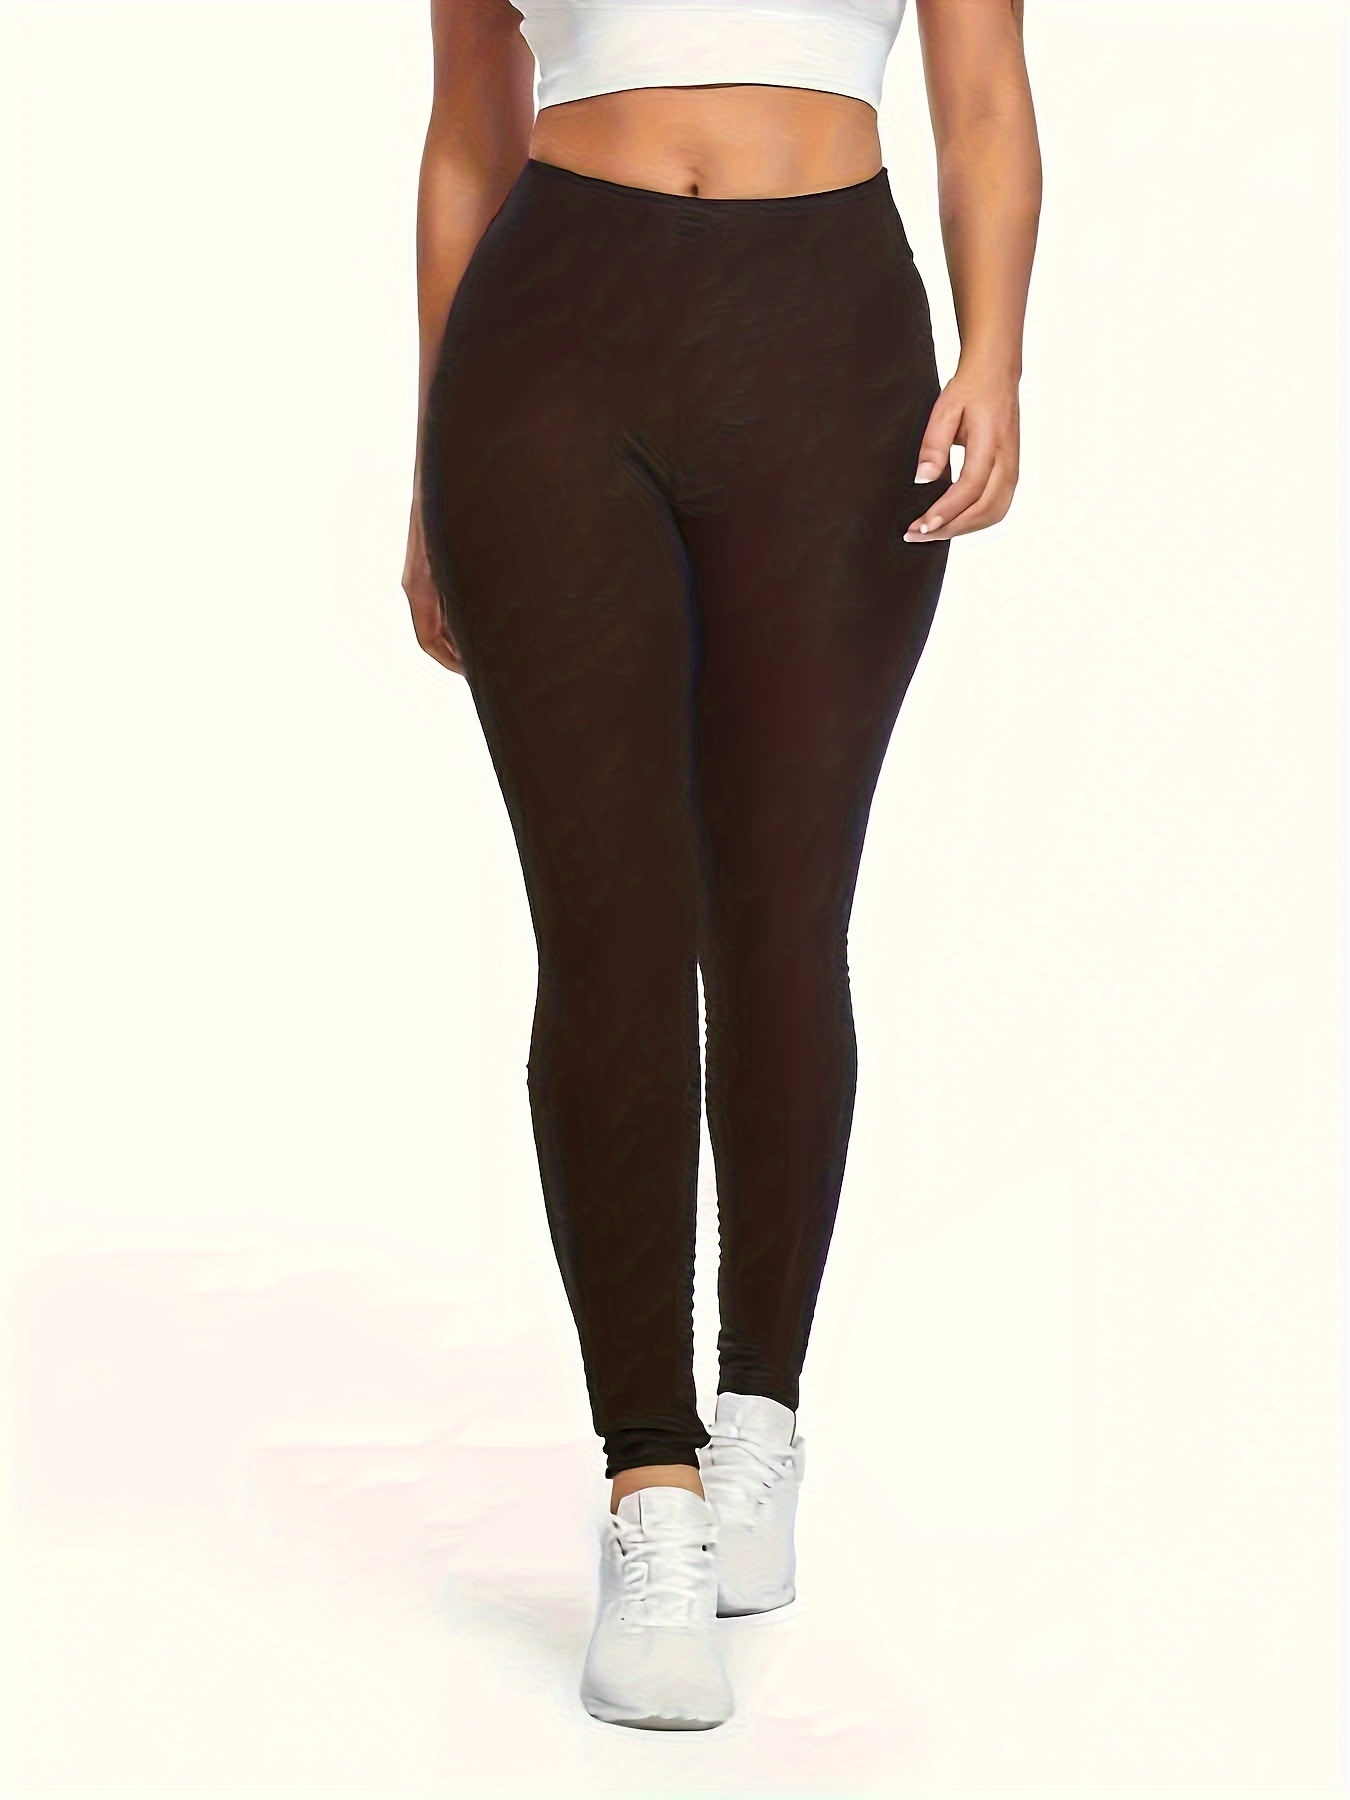 Tangerine women's extra large athletic leggings Size XL - $12